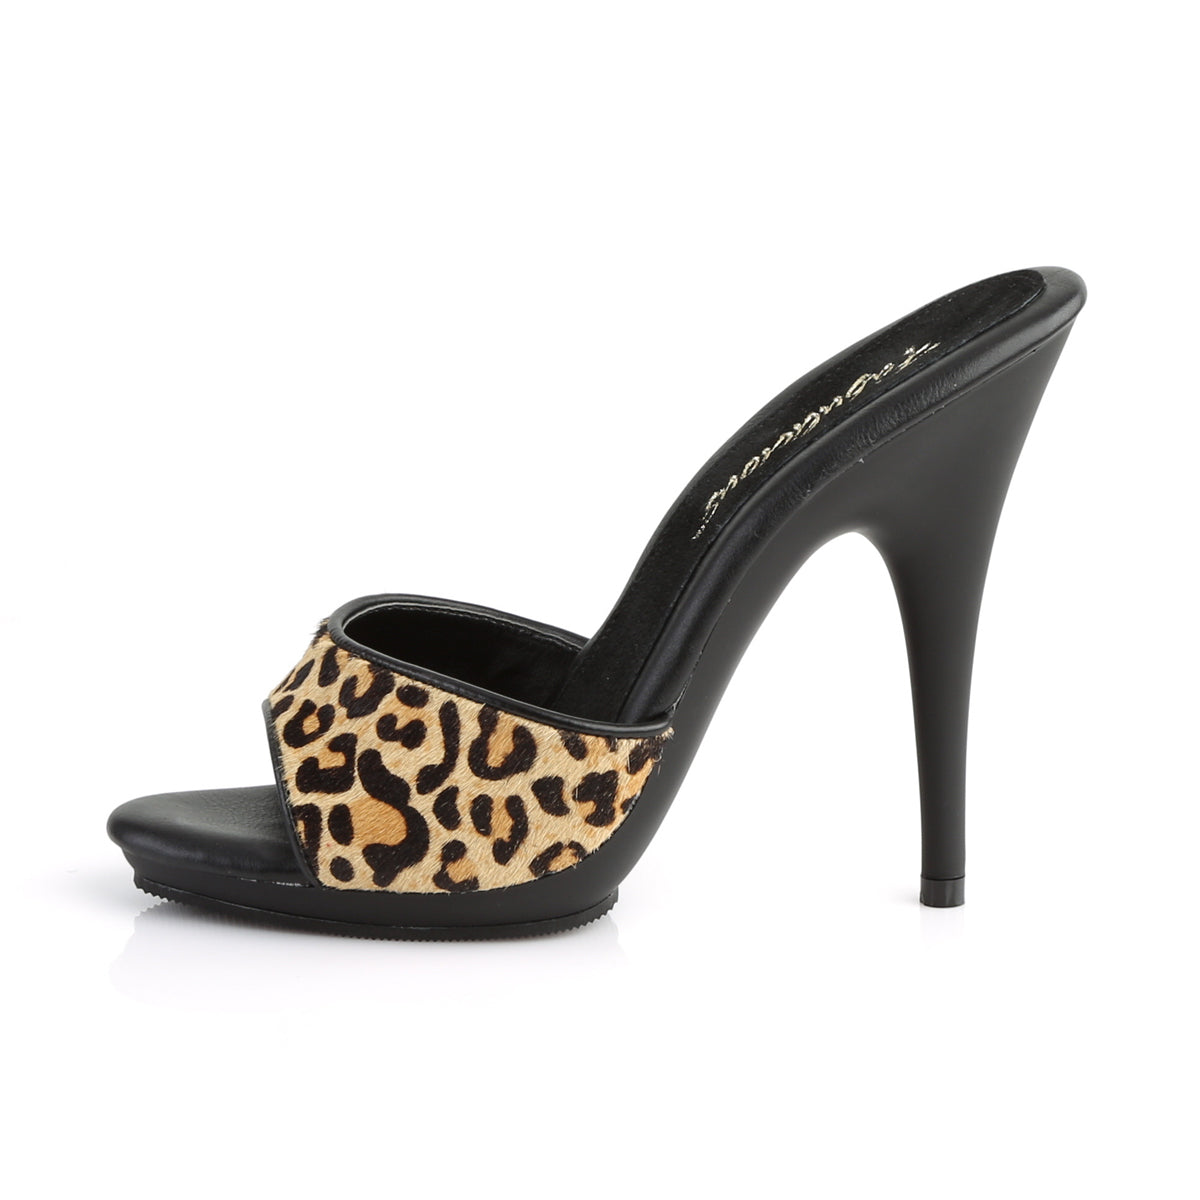 POISE-501FUR Fabulicious 5" Heel Leopard Print Fur Sexy Shoe-Fabulicious- Sexy Shoes Pole Dance Heels